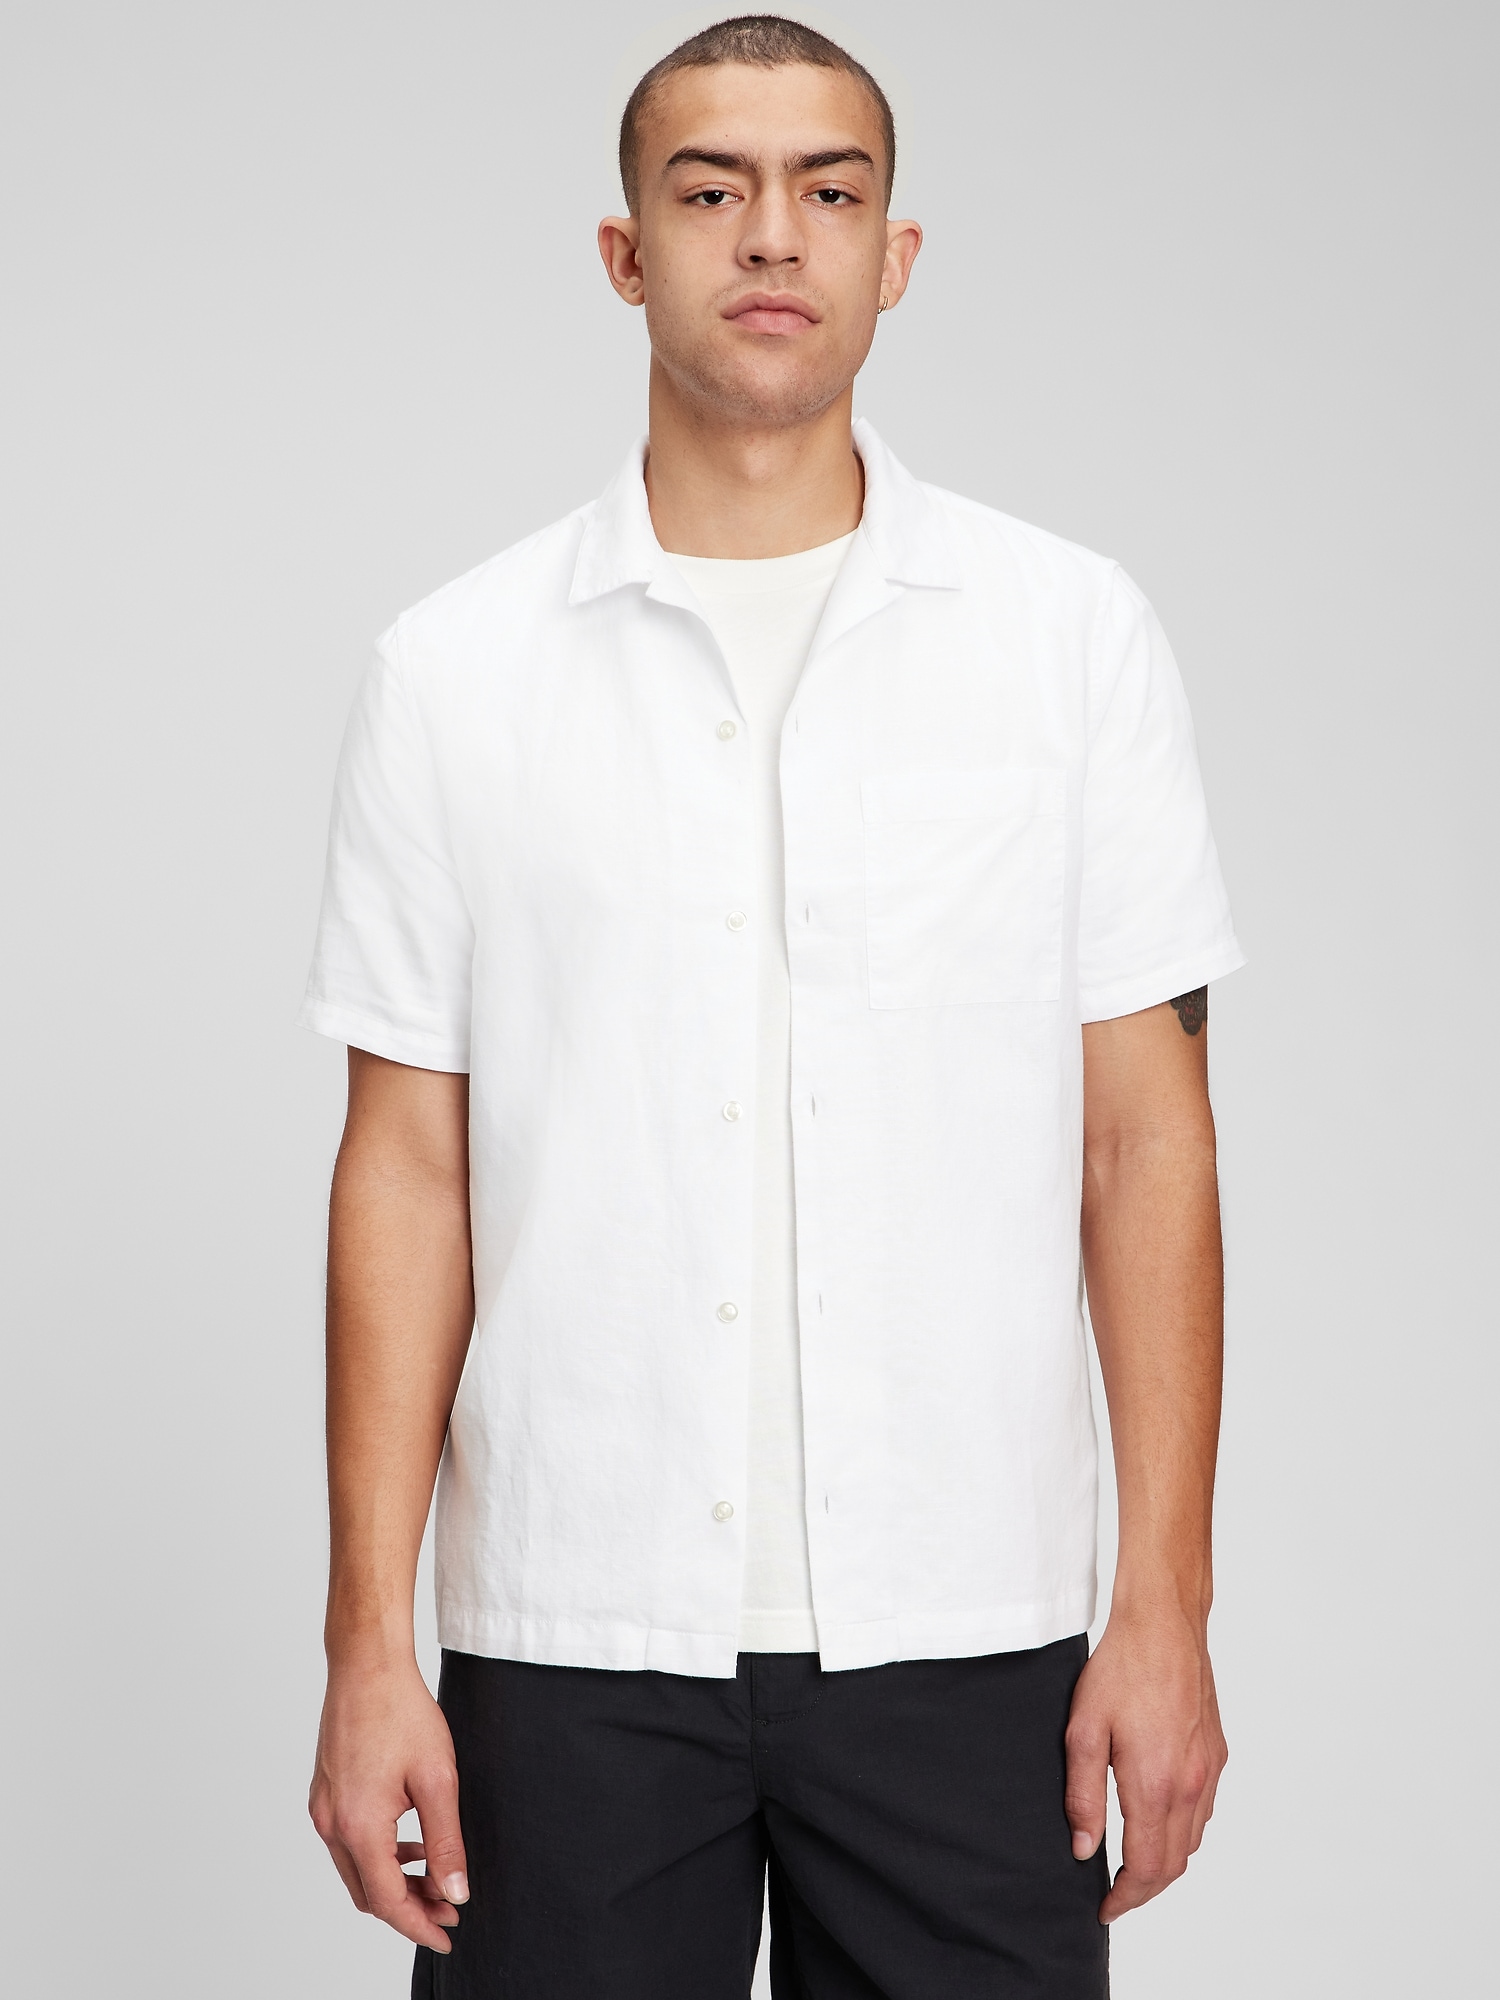 Resort Shirt in Linen-Cotton | Gap